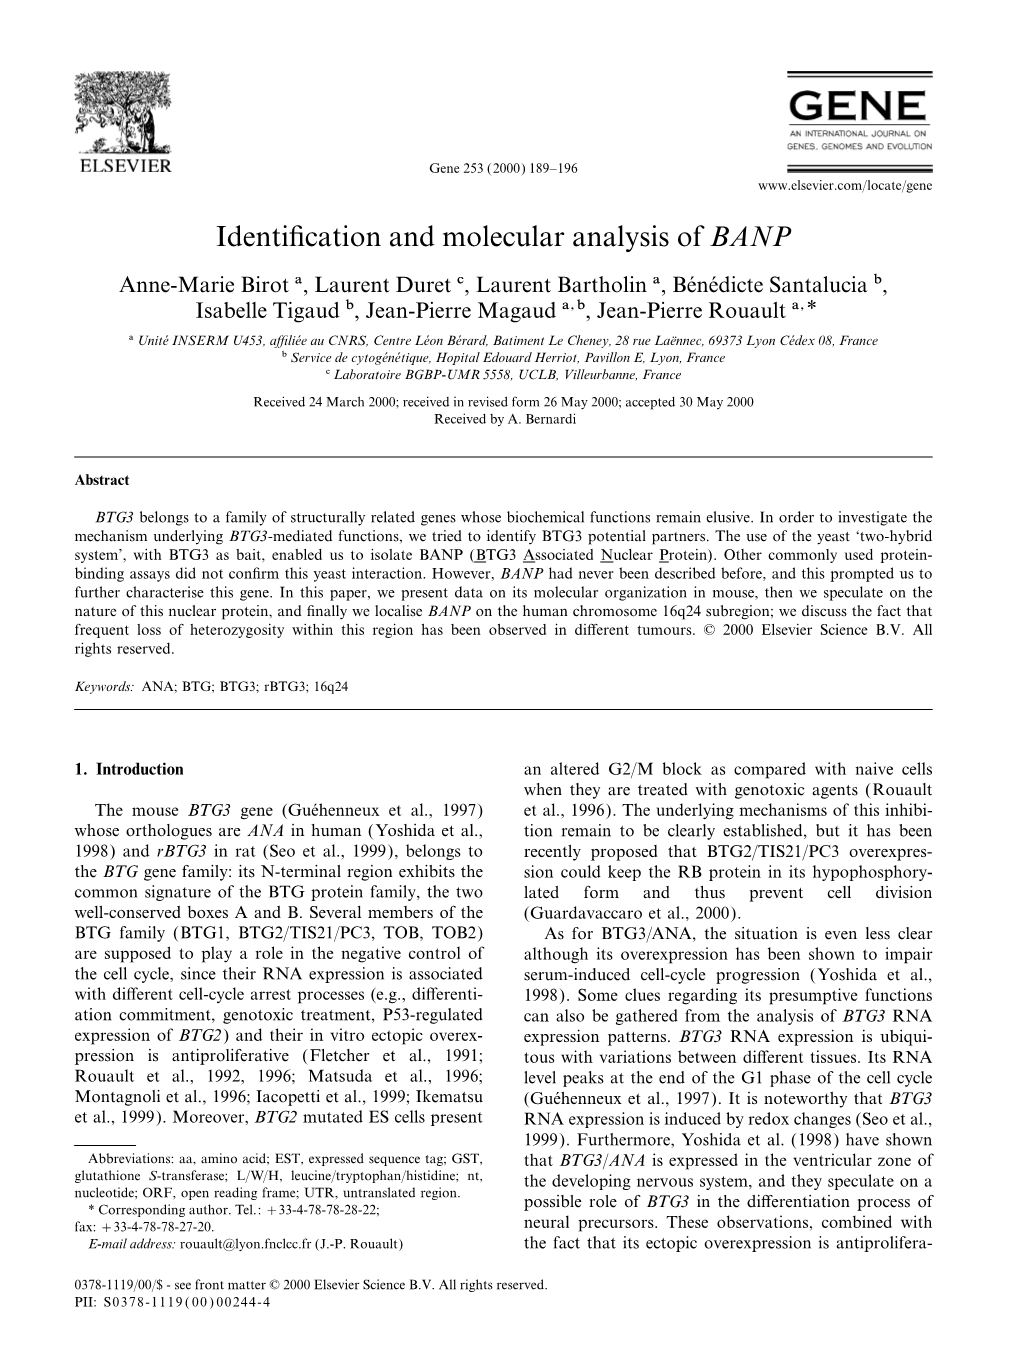 Identification and Molecular Analysis of BANP